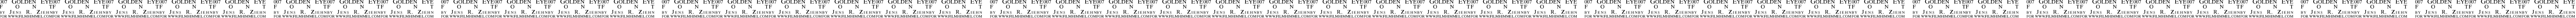 Пример написания шрифтом 007 GoldenEye текста на русском